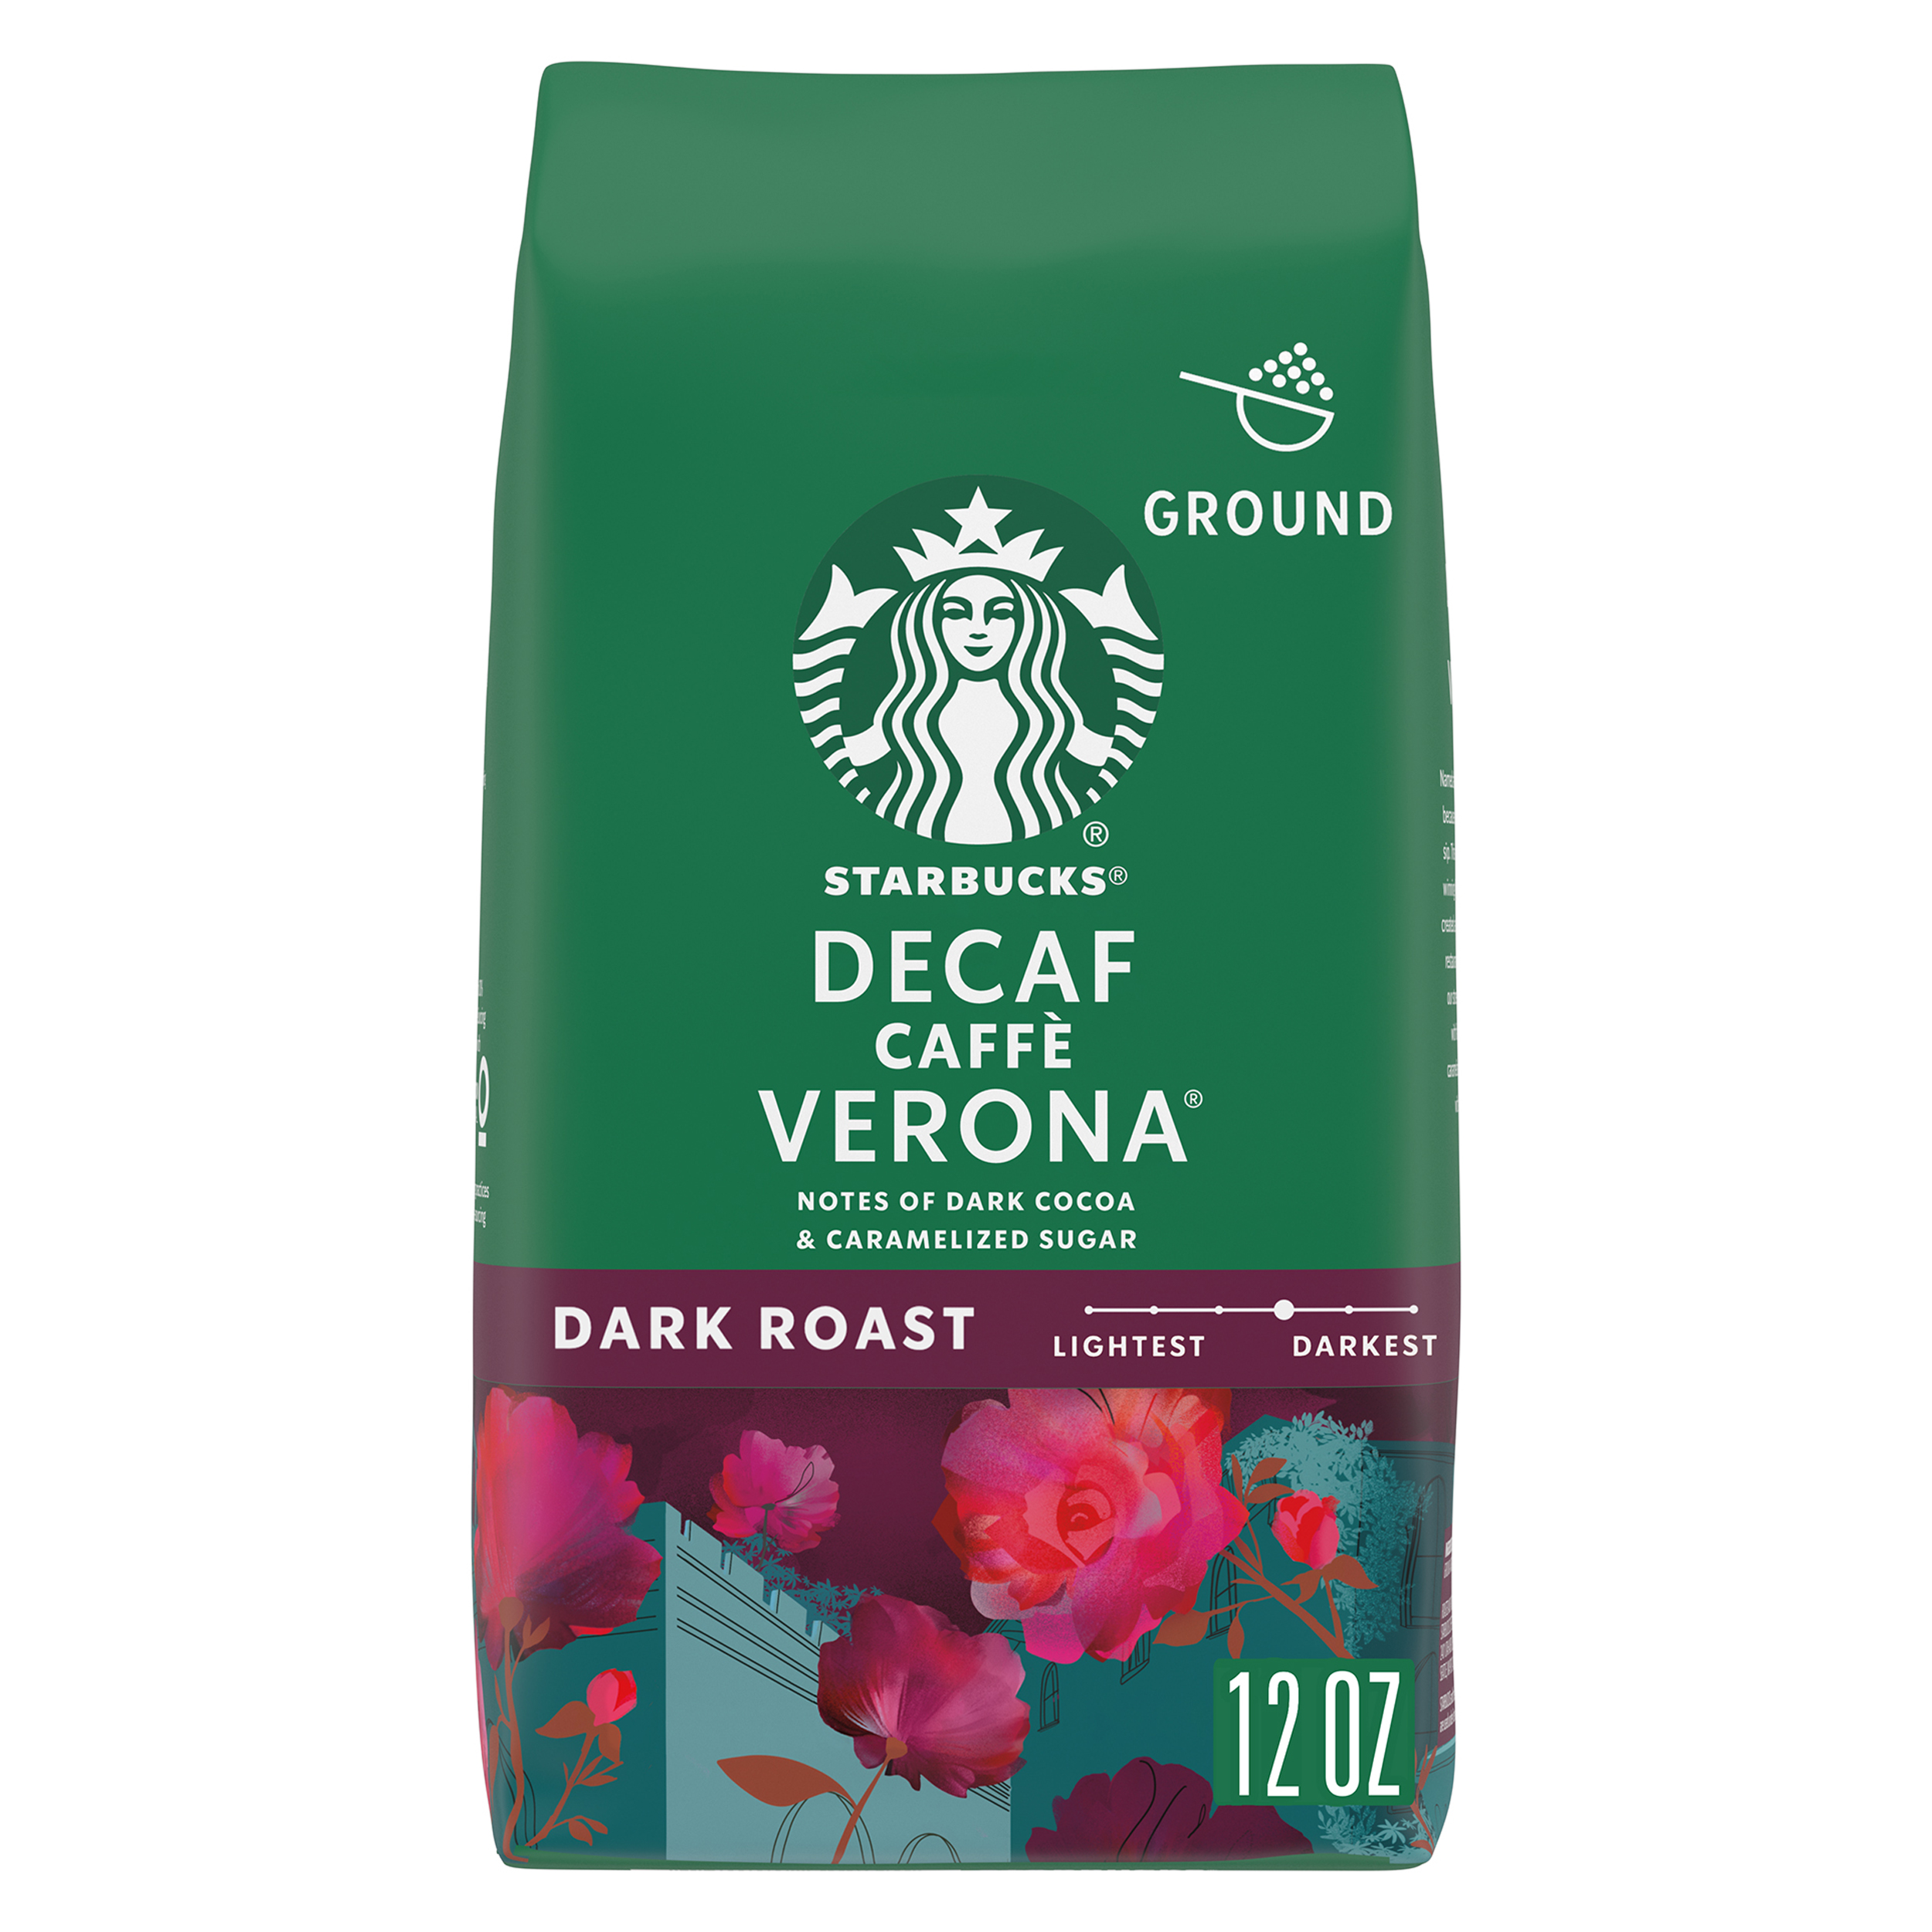 Starbucks Decaf Caffè Verona, Ground Coffee, Dark Roast, 12 oz - image 1 of 8